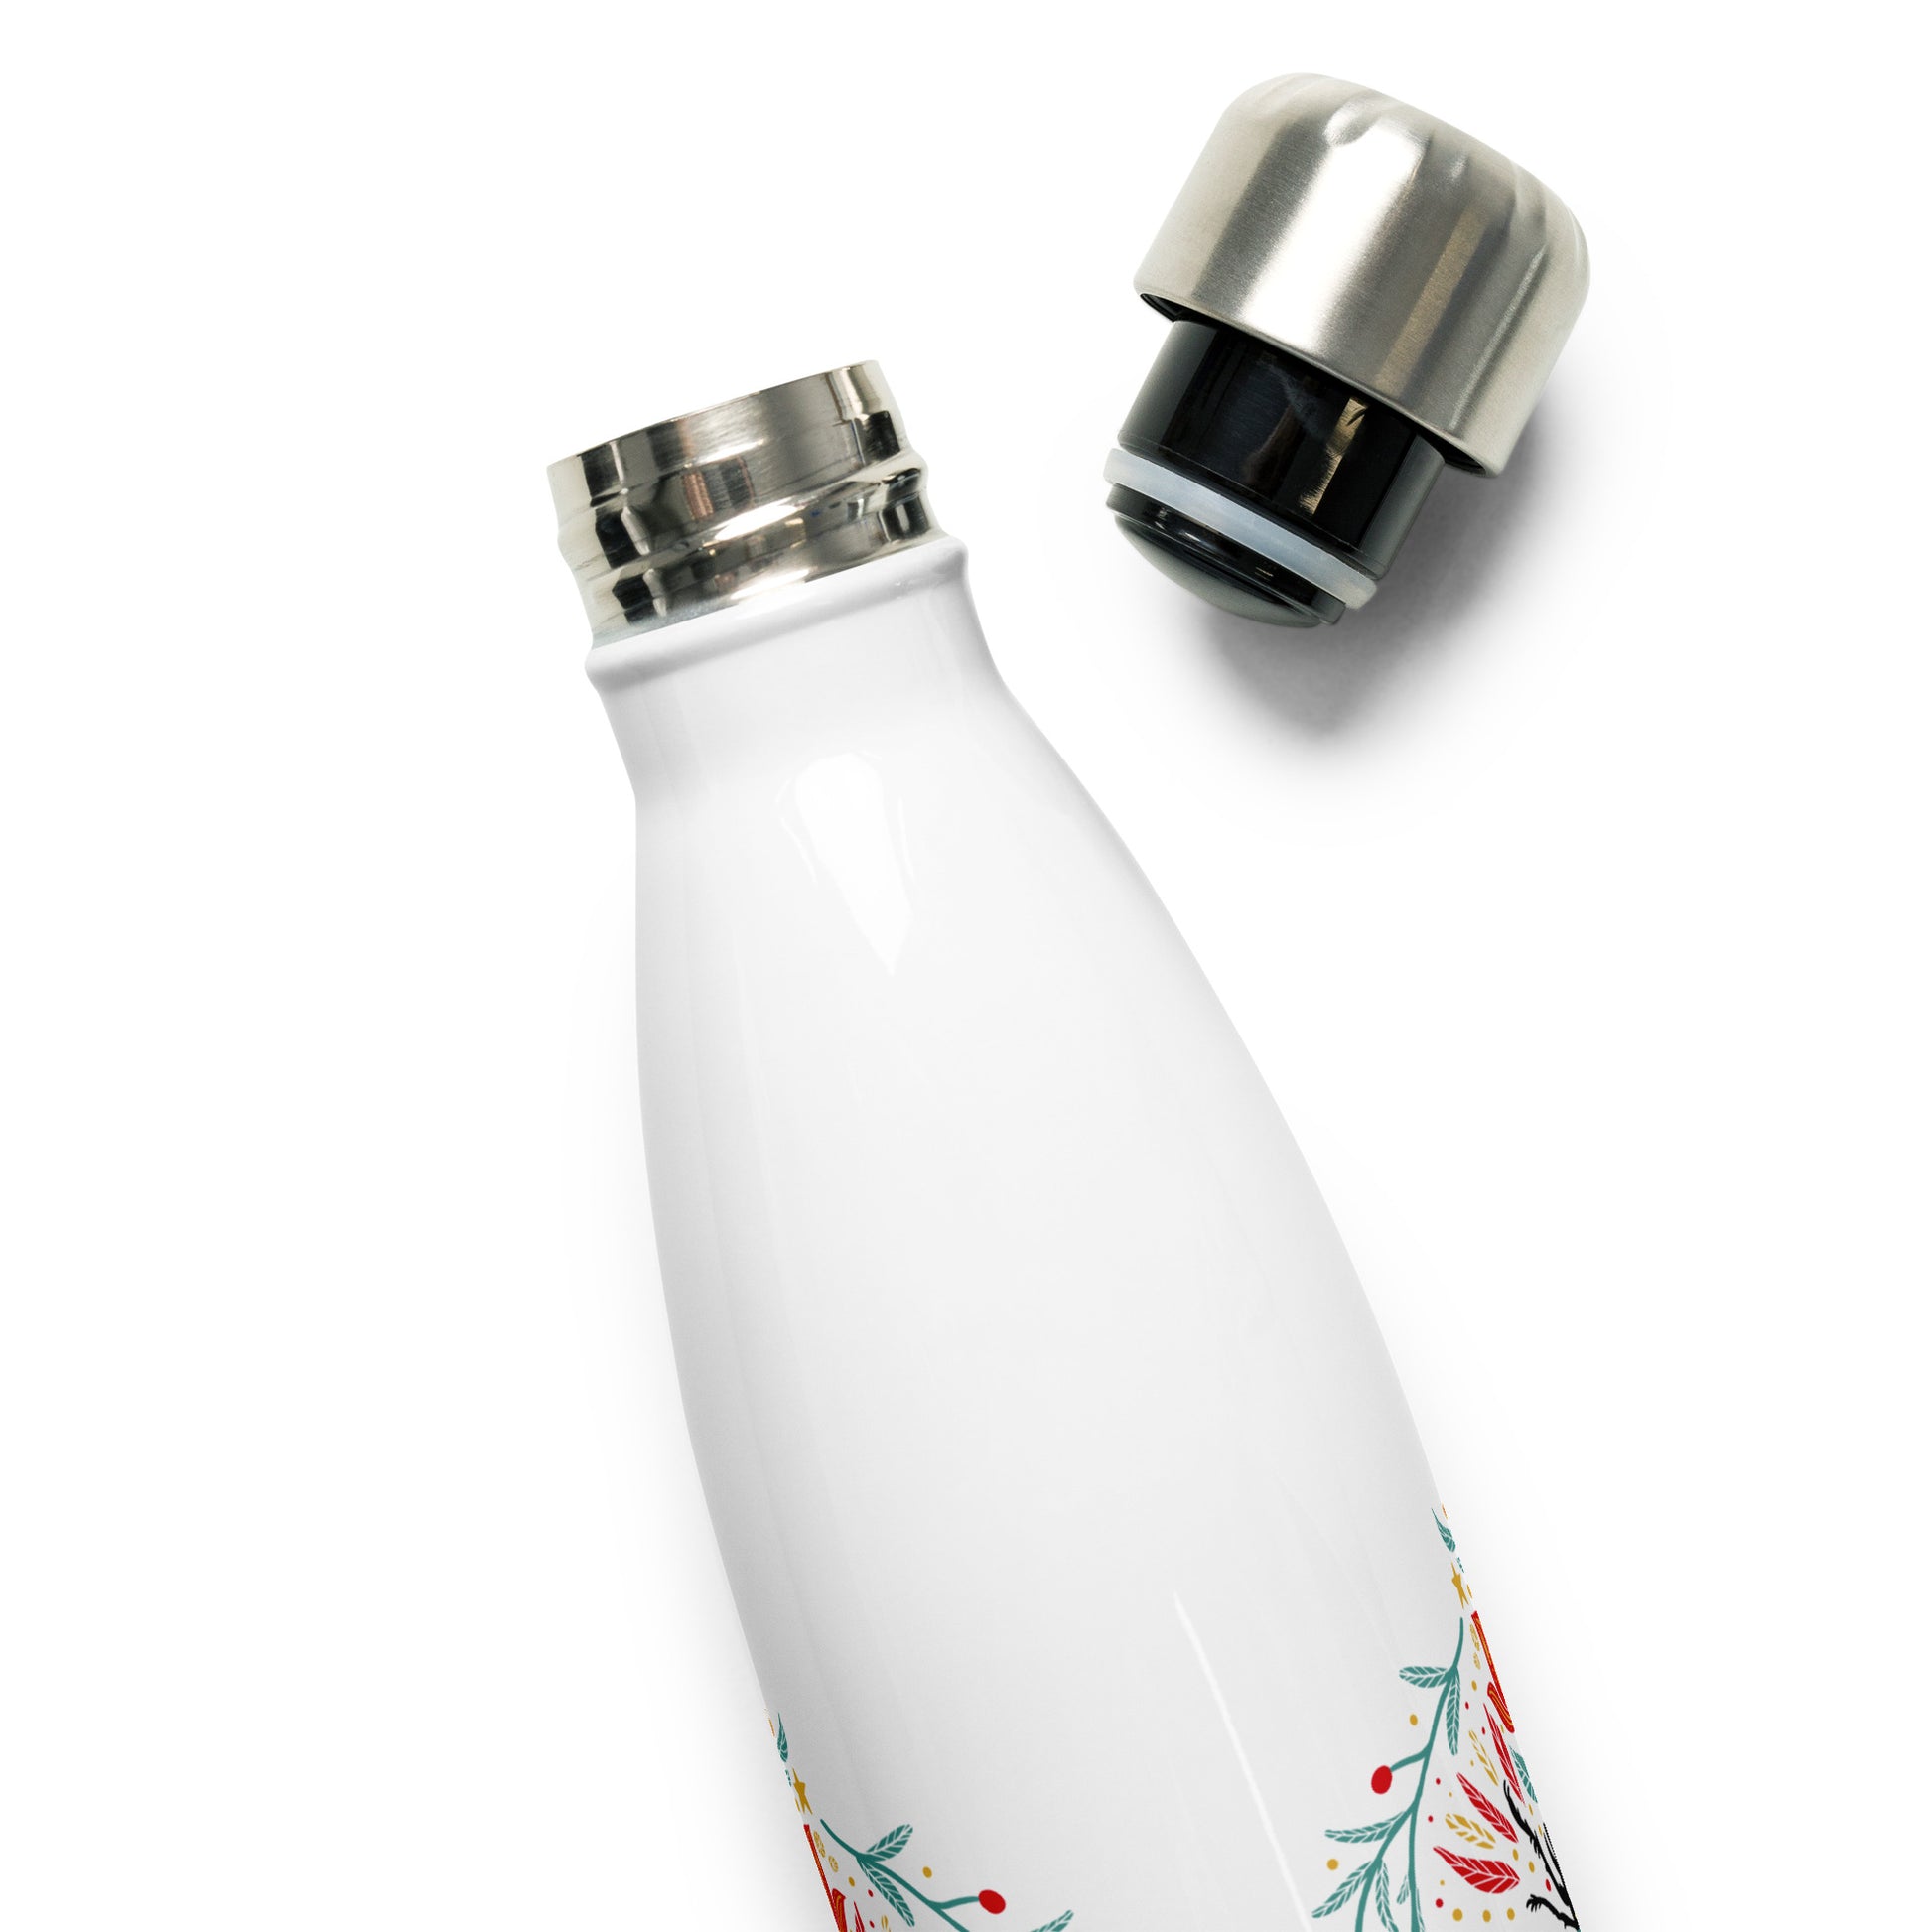 Enchanted beetle - Stainless Steel Water Bottle - Water Bottles- Print N Stuff - [designed in Turku FInland]